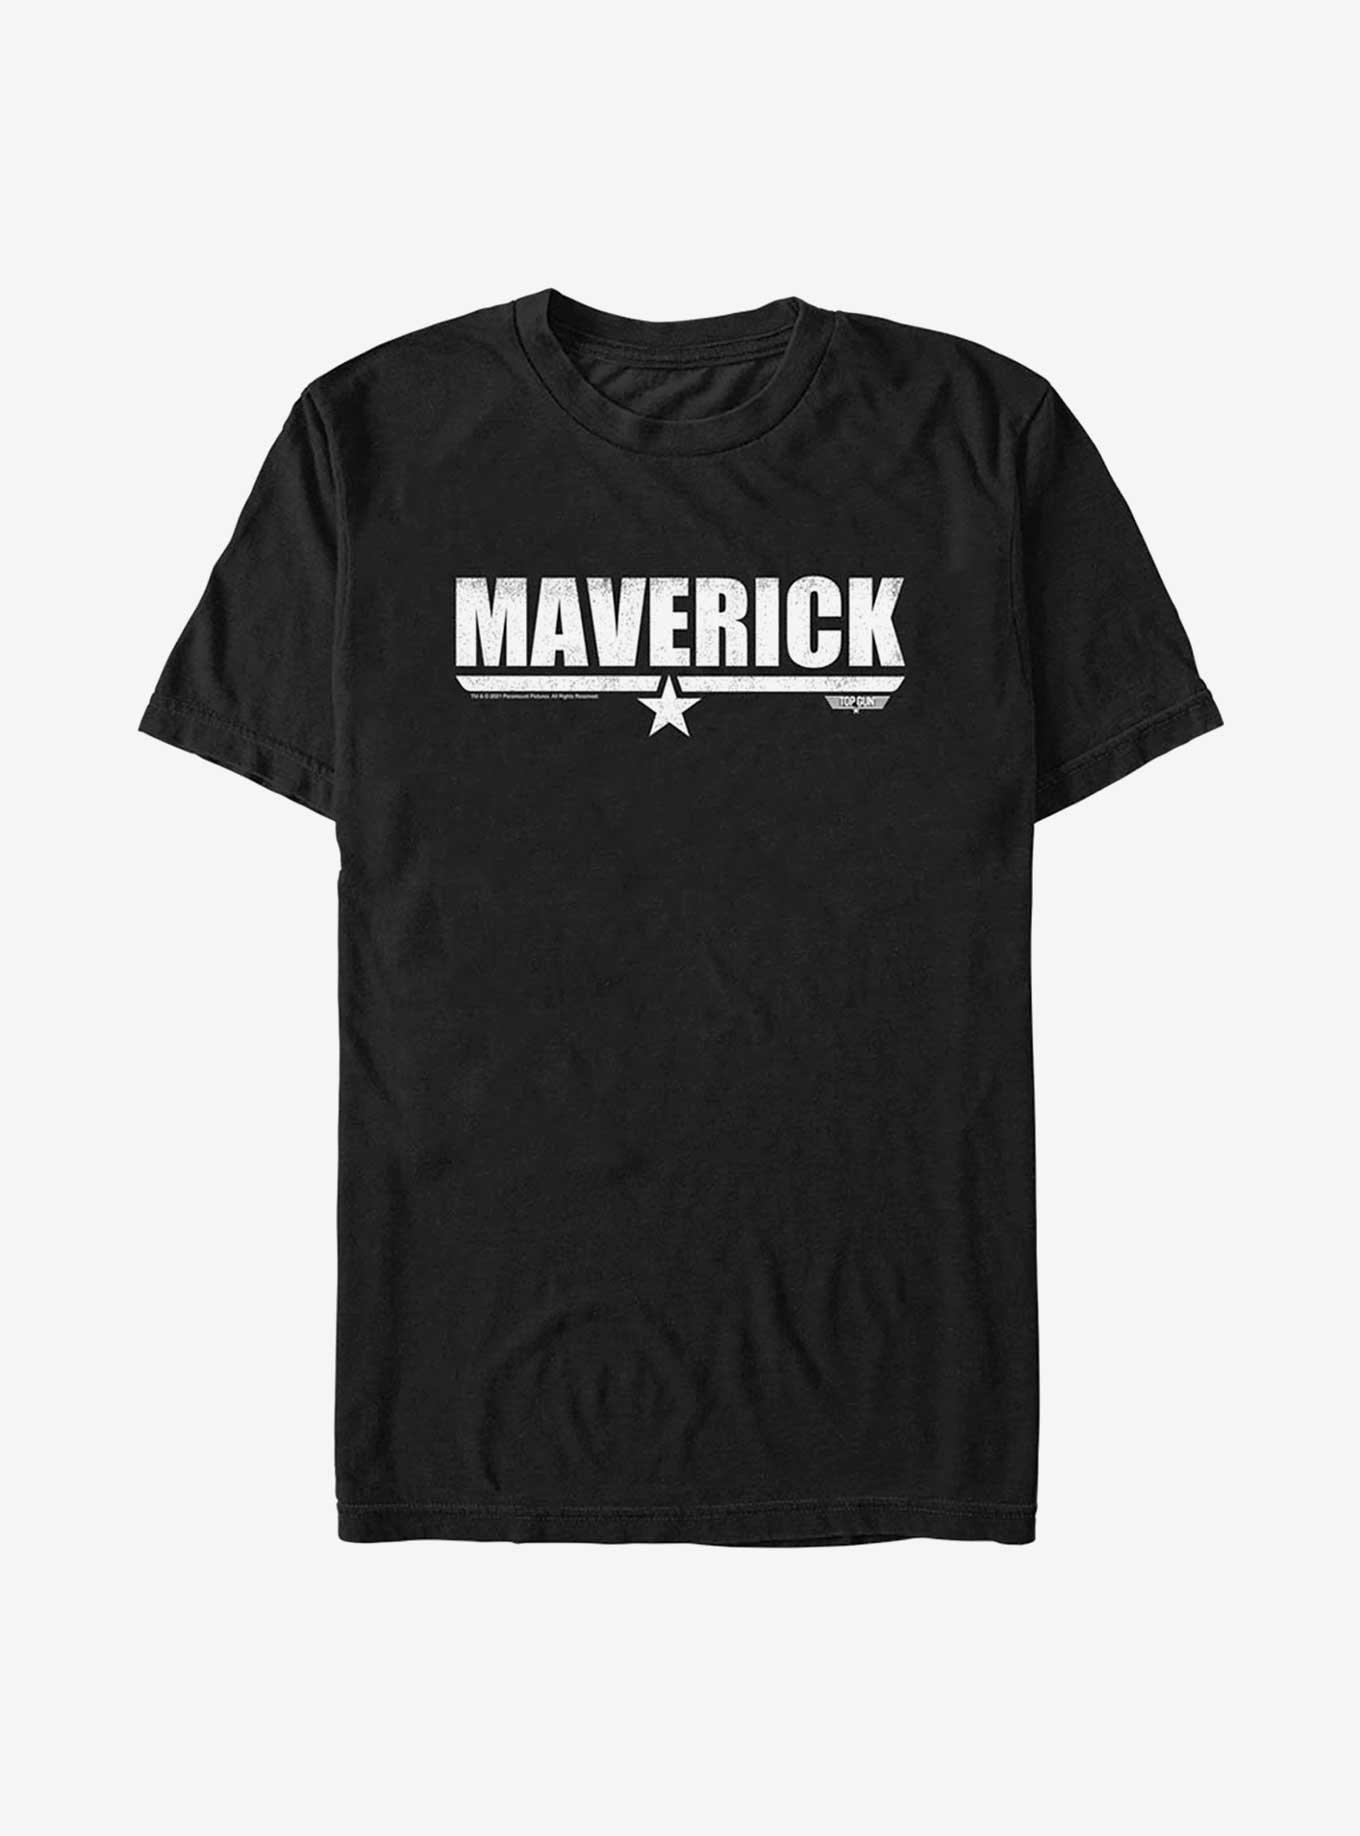 Top Gun Maverick Maverick T-Shirt, BLACK, hi-res